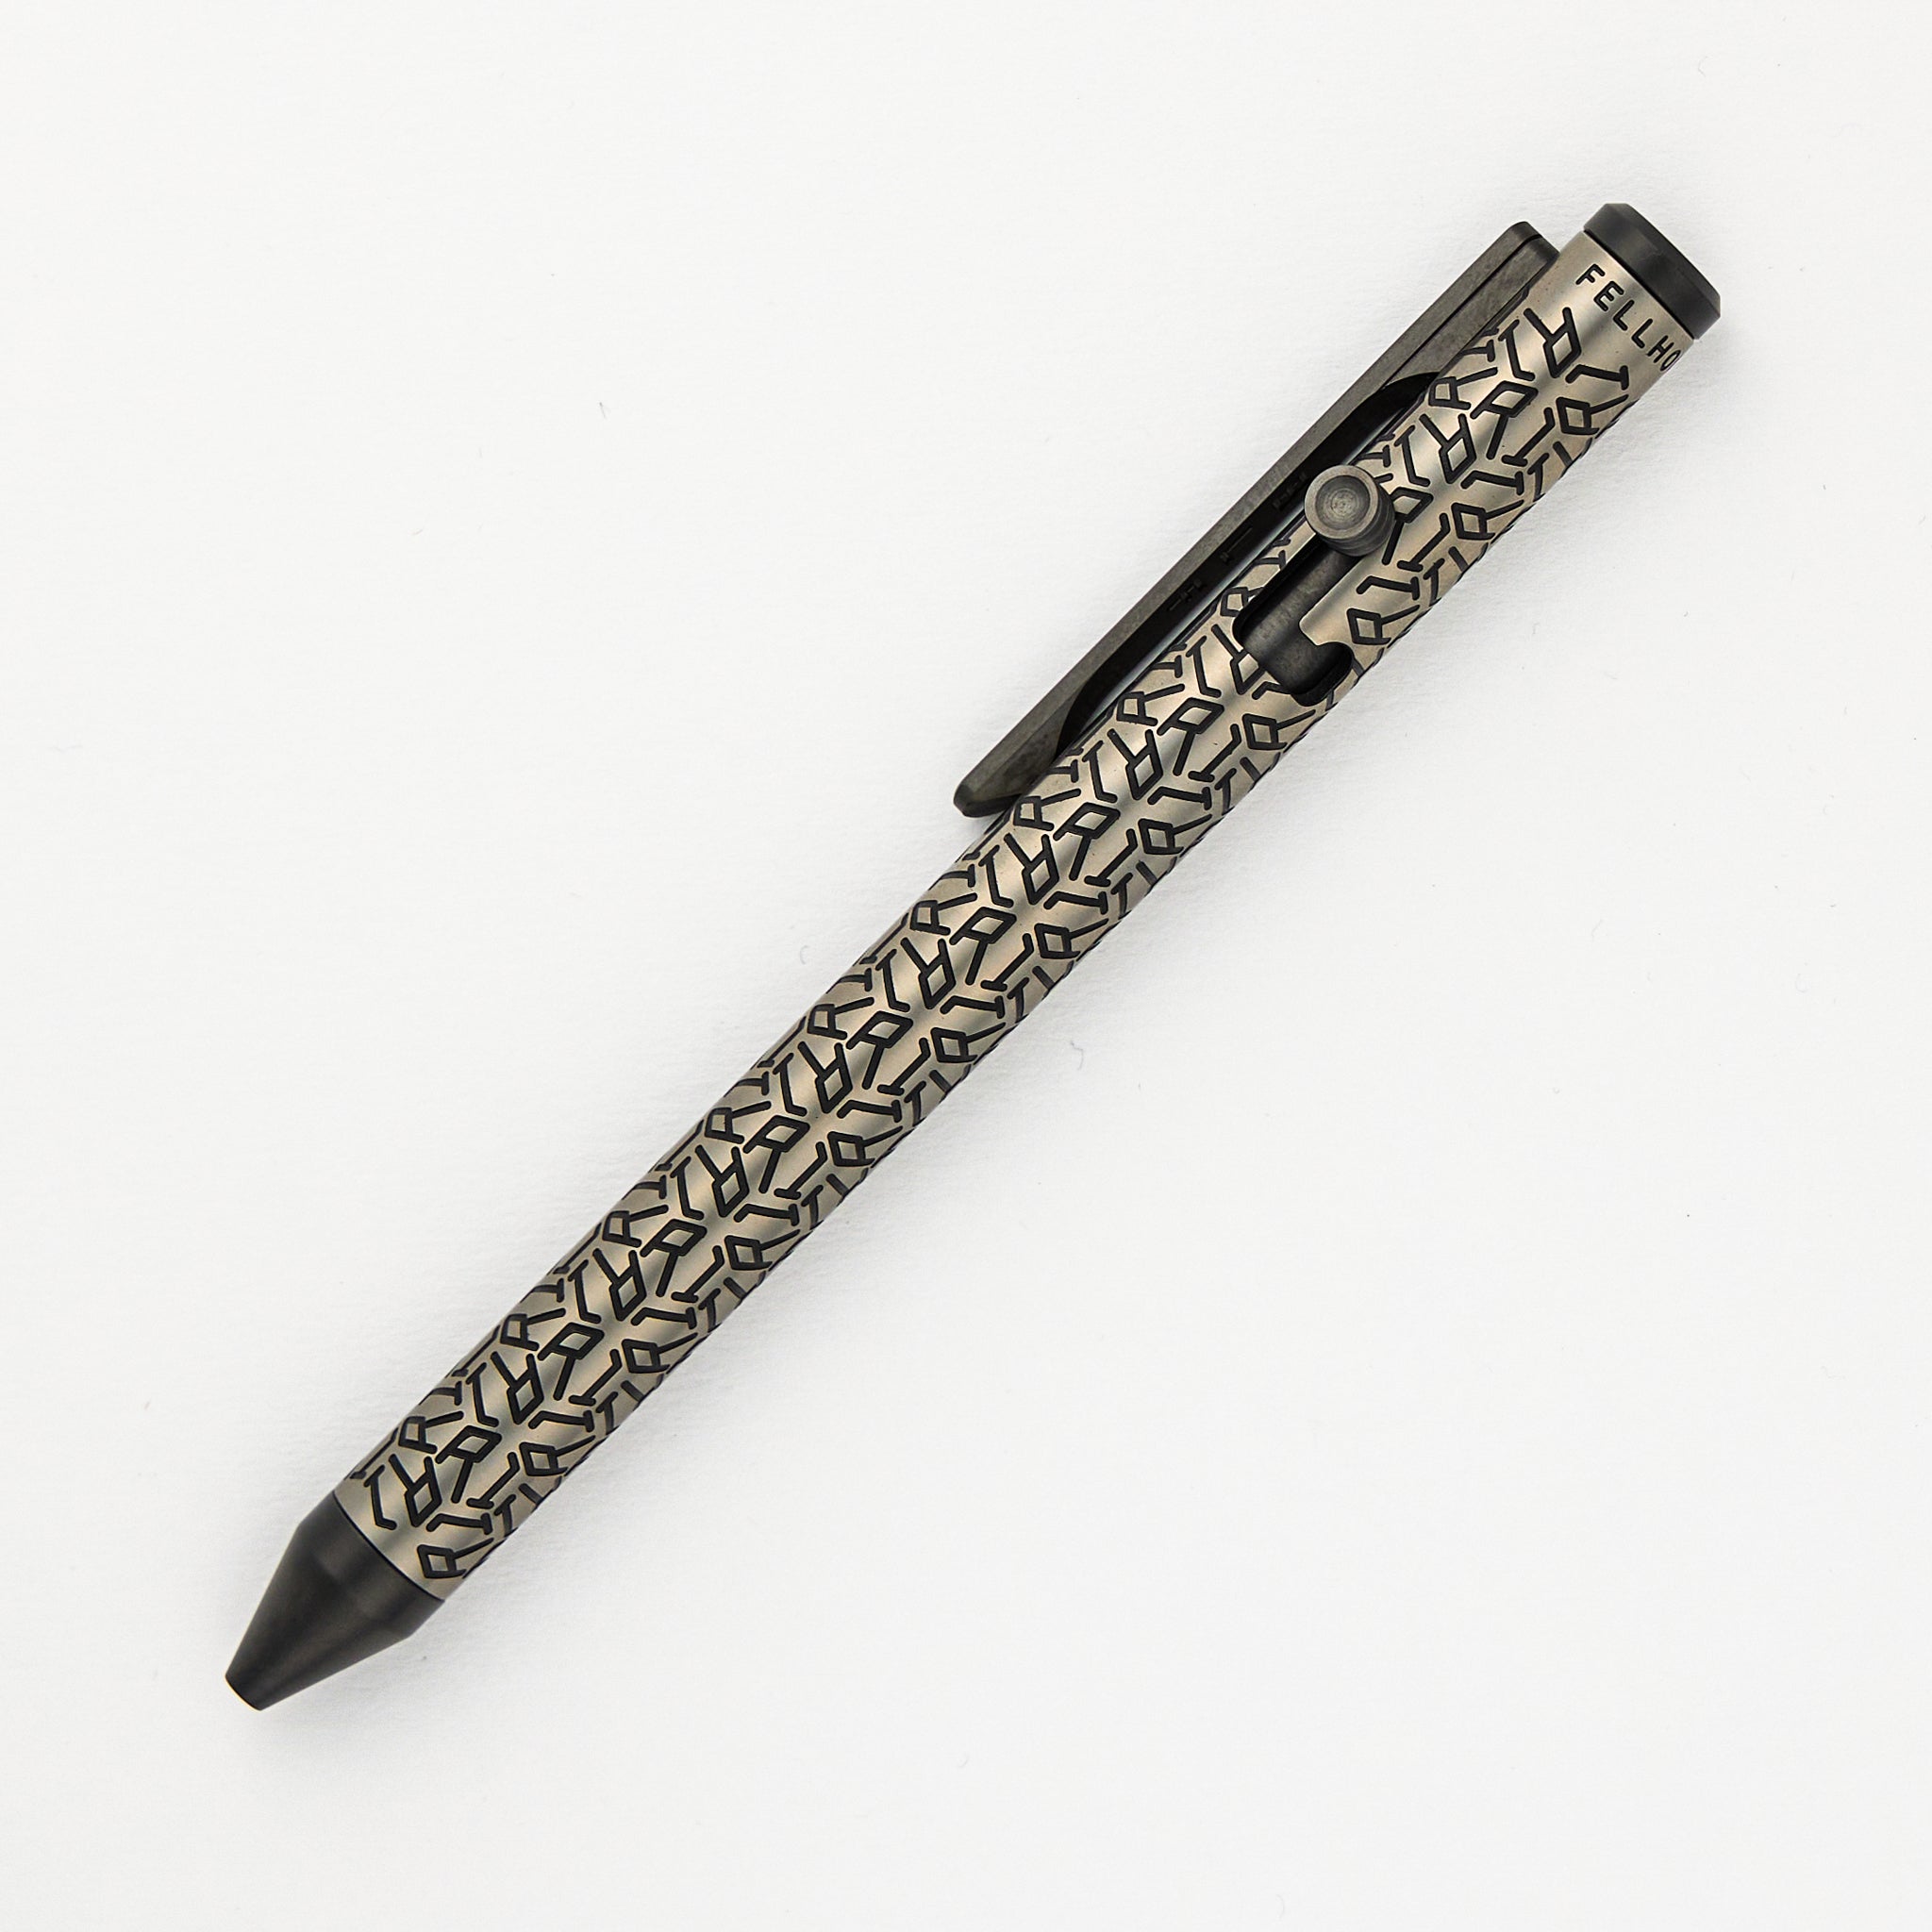 Fellhoelter/Cptn Axel Full Size TiBolt Pen – Titanium/Zirconium “Tuxedo” R1P